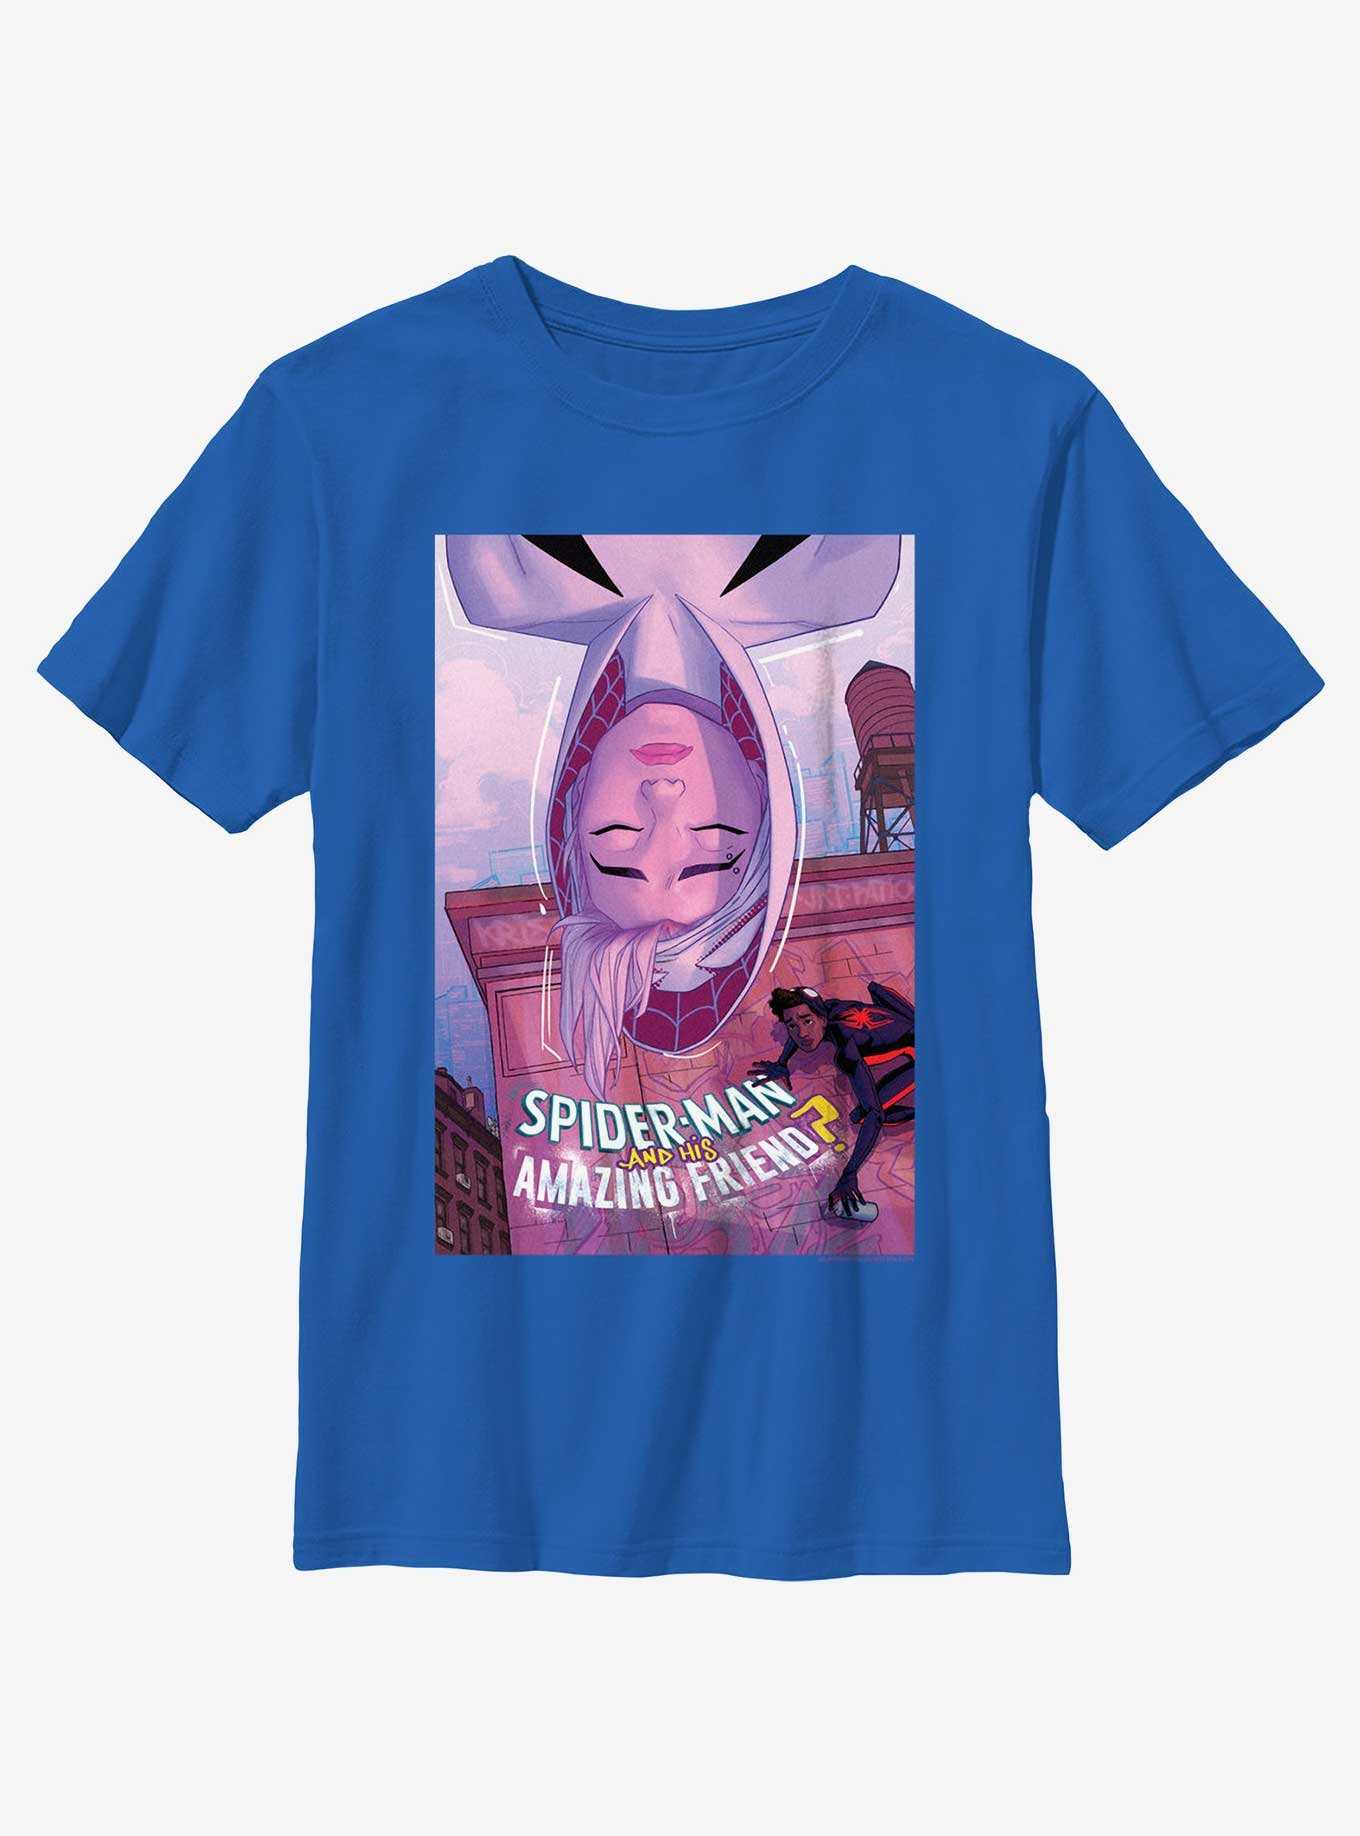 Marvel Spider-Man Spider-Gwen Amazing Friend Poster Youth T-Shirt, , hi-res